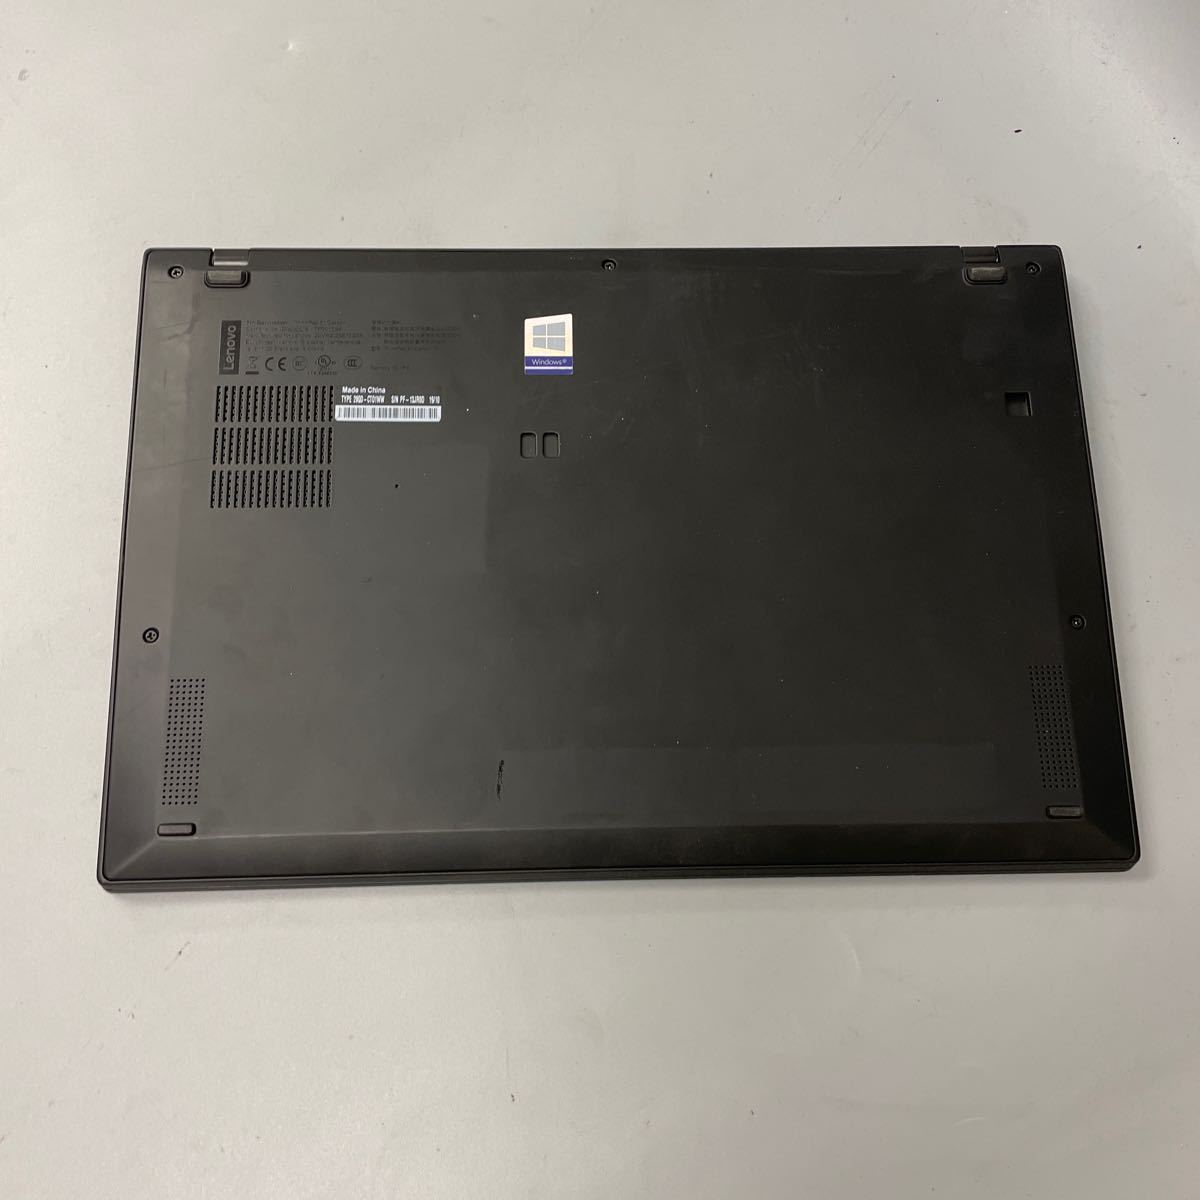 JXJK4062 【ジャンク】Lenovo ThinkPad X1 Carbon /Core i7-8565U 1.80GHz/ メモリ:16GB /動作未確認/BIOS確認済/パスワードあり_画像9